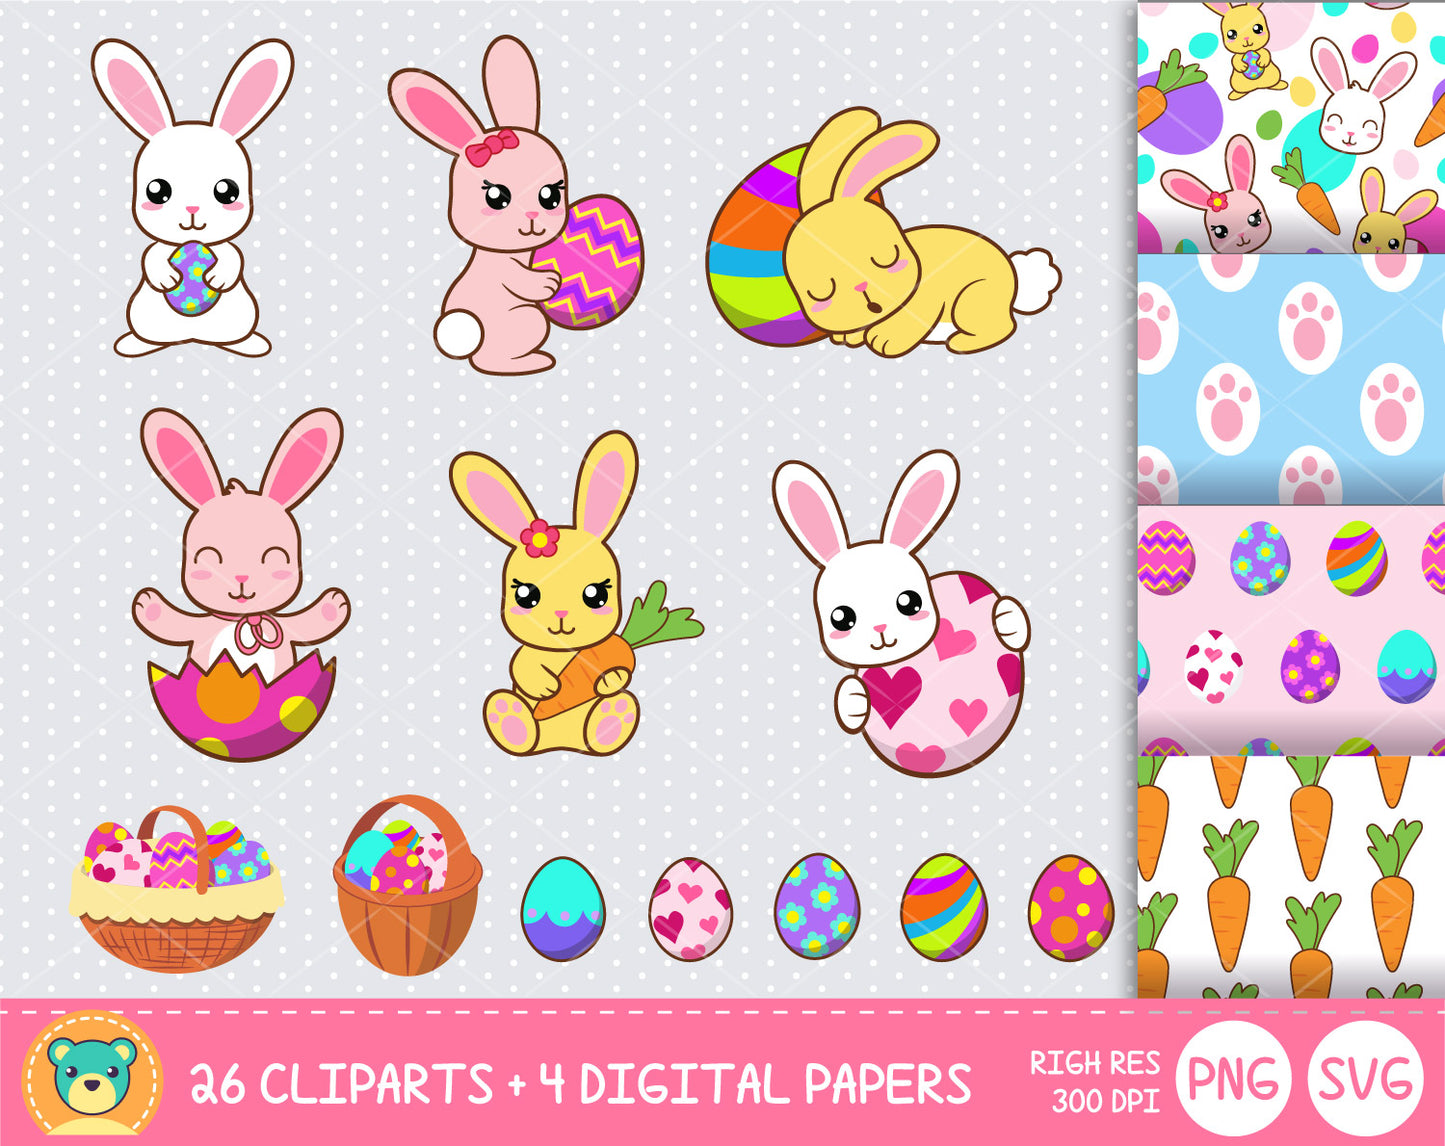 Cute Easter Bunny clipart set, Digital clip art for decoration, scrapbooking, PNG, SVG, instant download